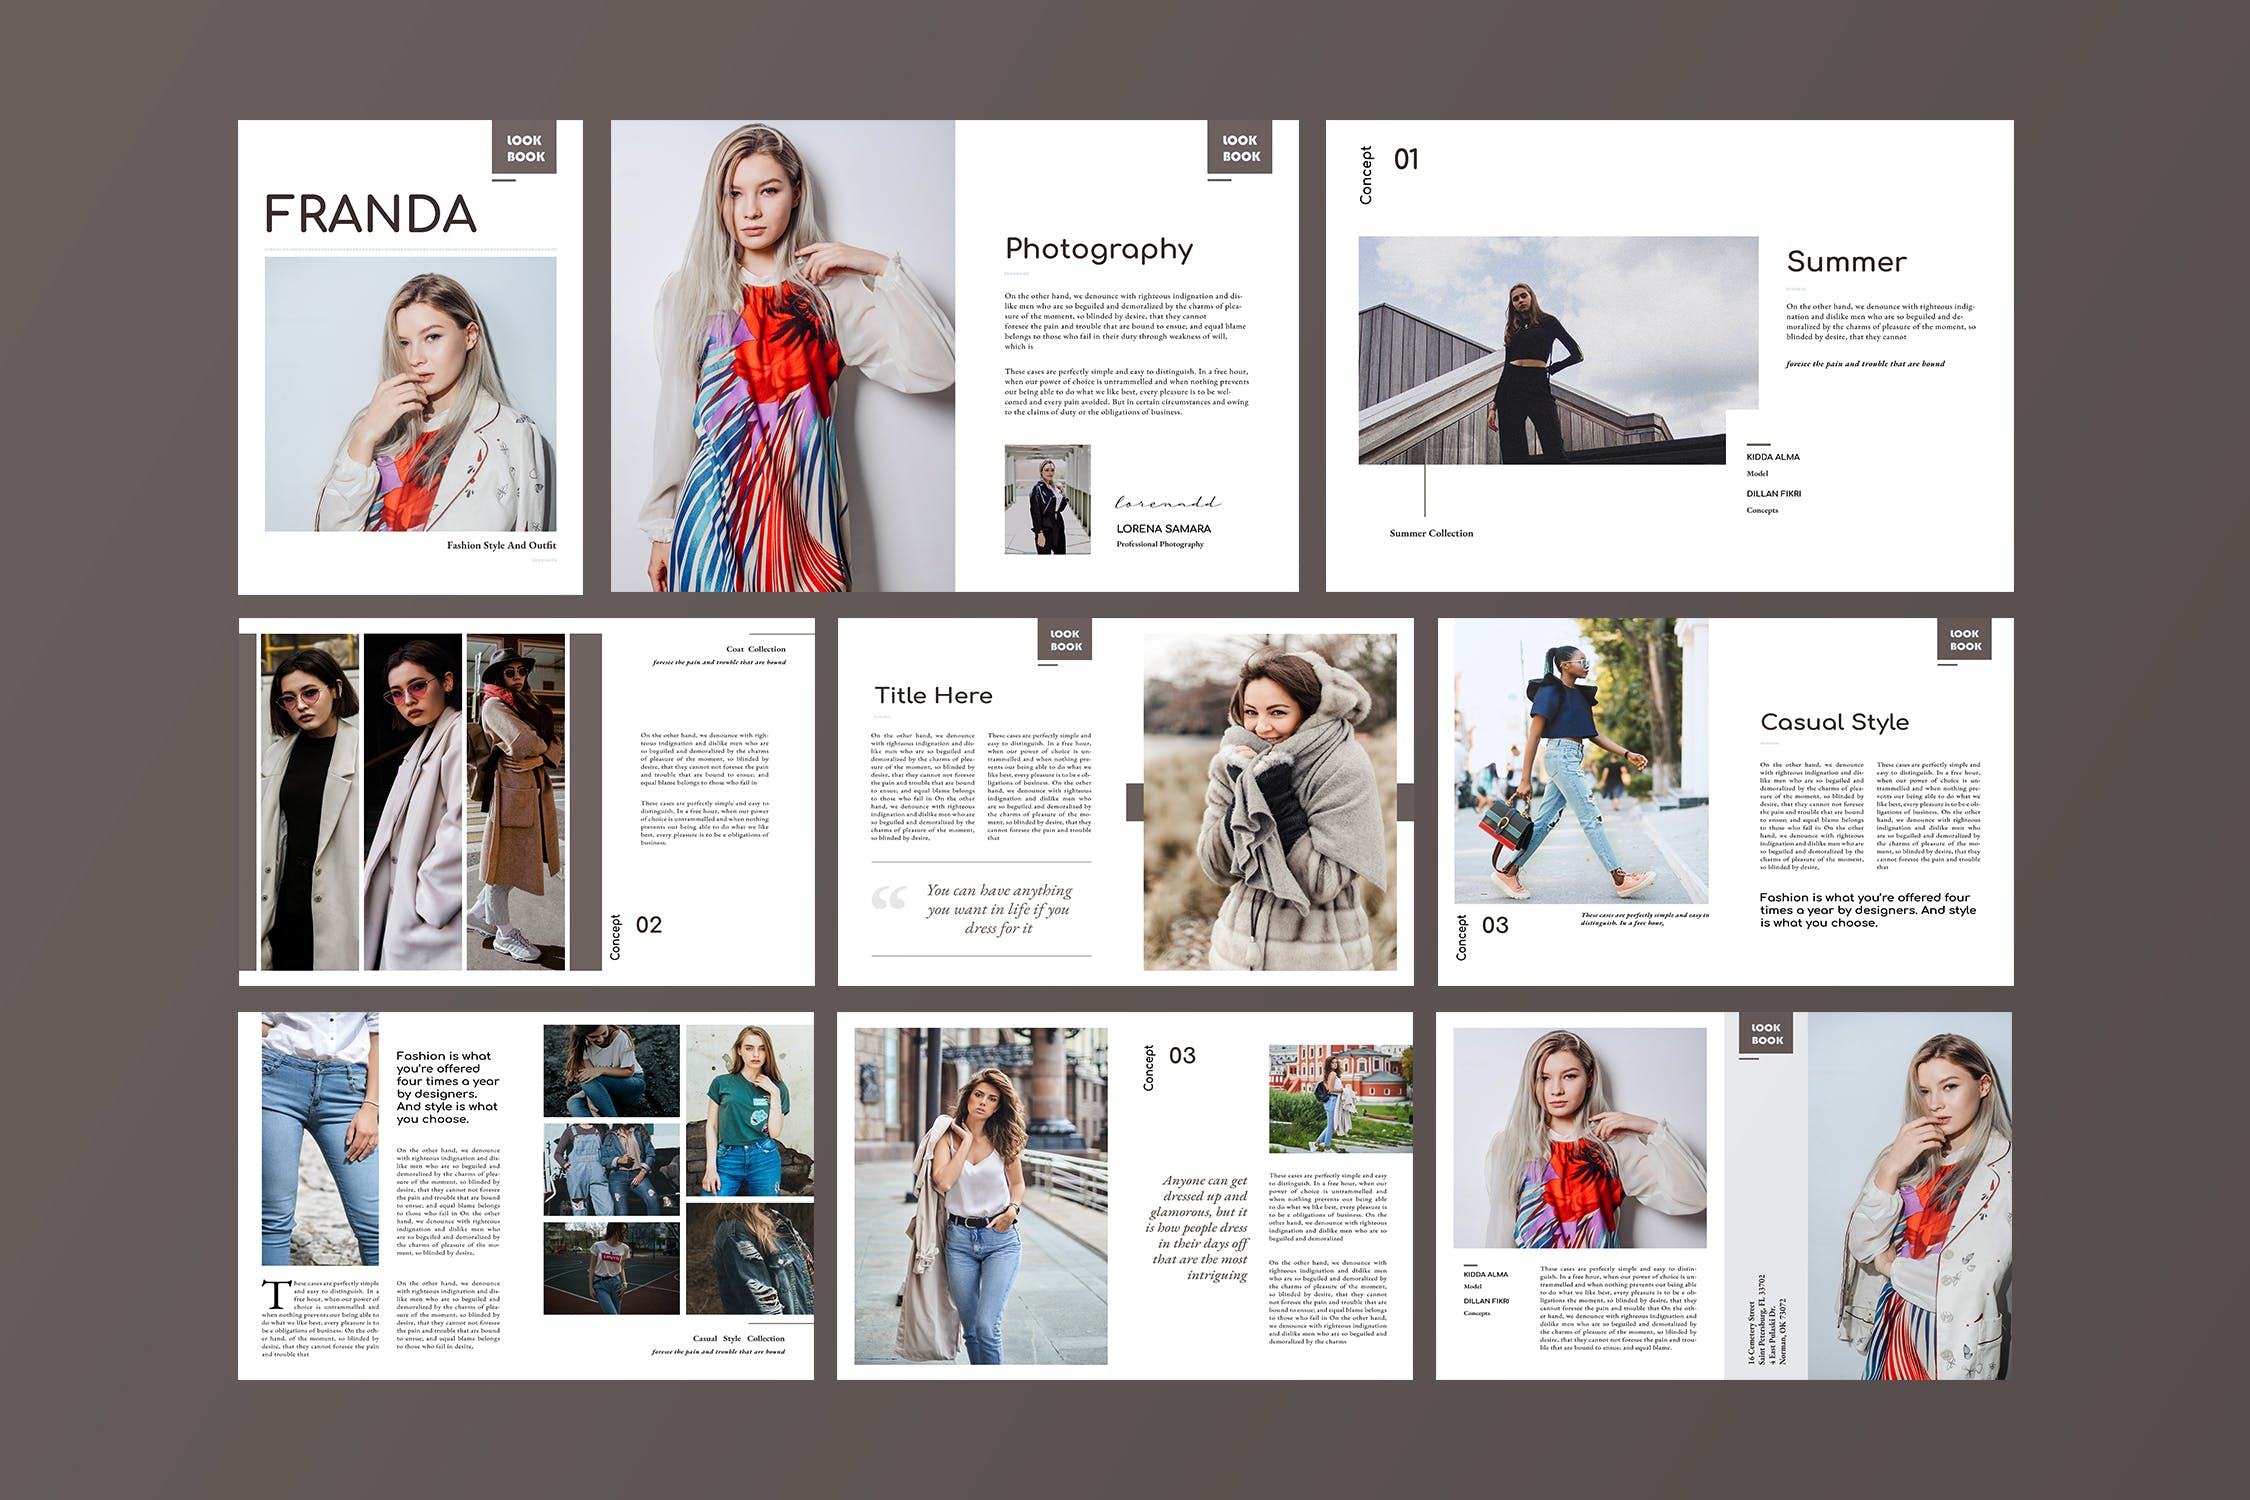 时尚服饰品牌产品画册/手册设计模板 Fashion Lookbook Catalogue插图(3)